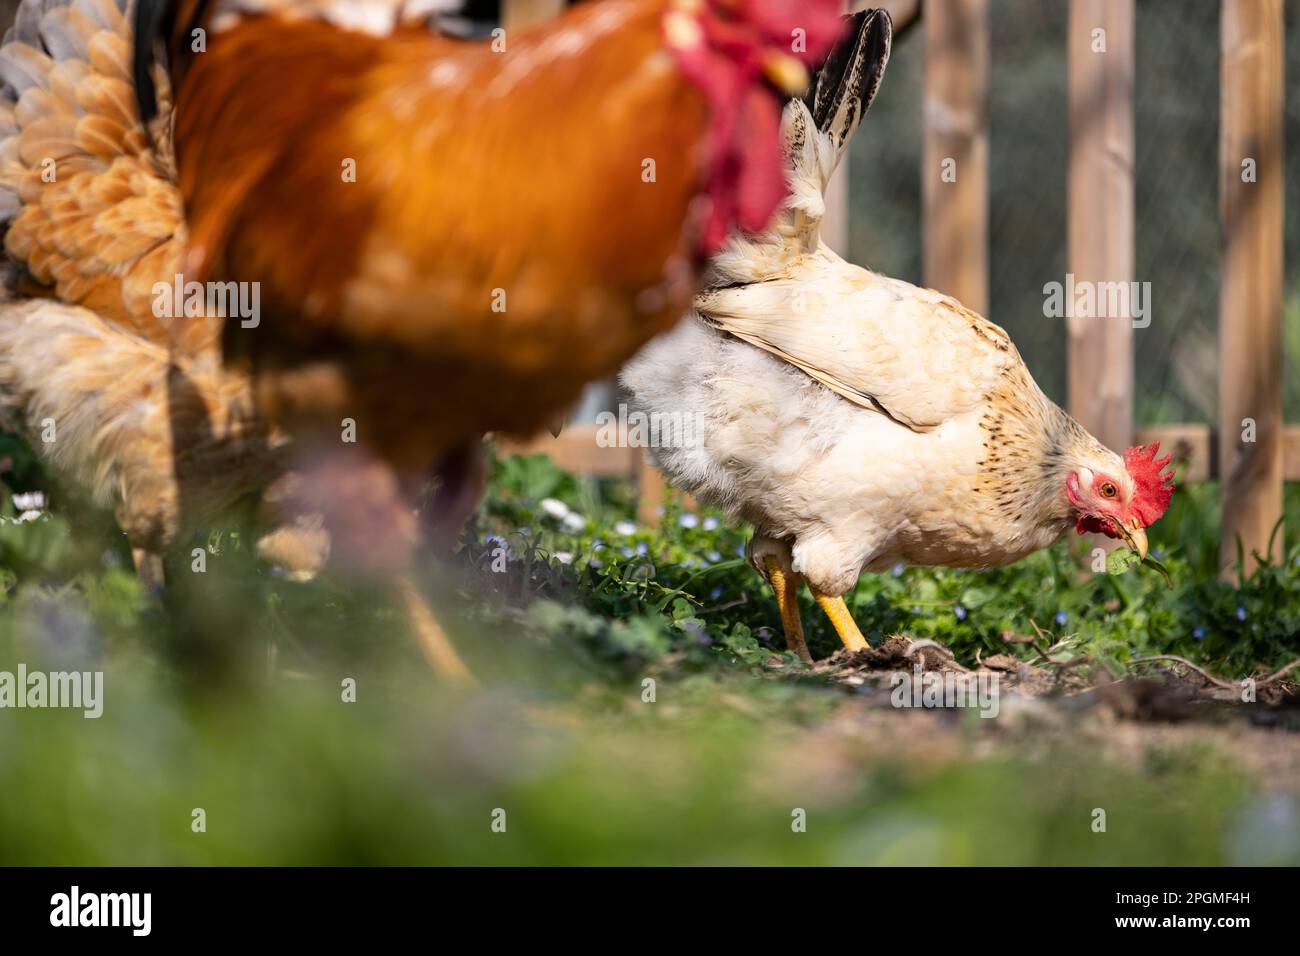 Razza Empordanesa (gallina de raca empordanesa) gallina che vagano liberamente e si nutrono nell'erba (Gallus gallus domesticus). El Baix Empordà, Girona. Foto Stock